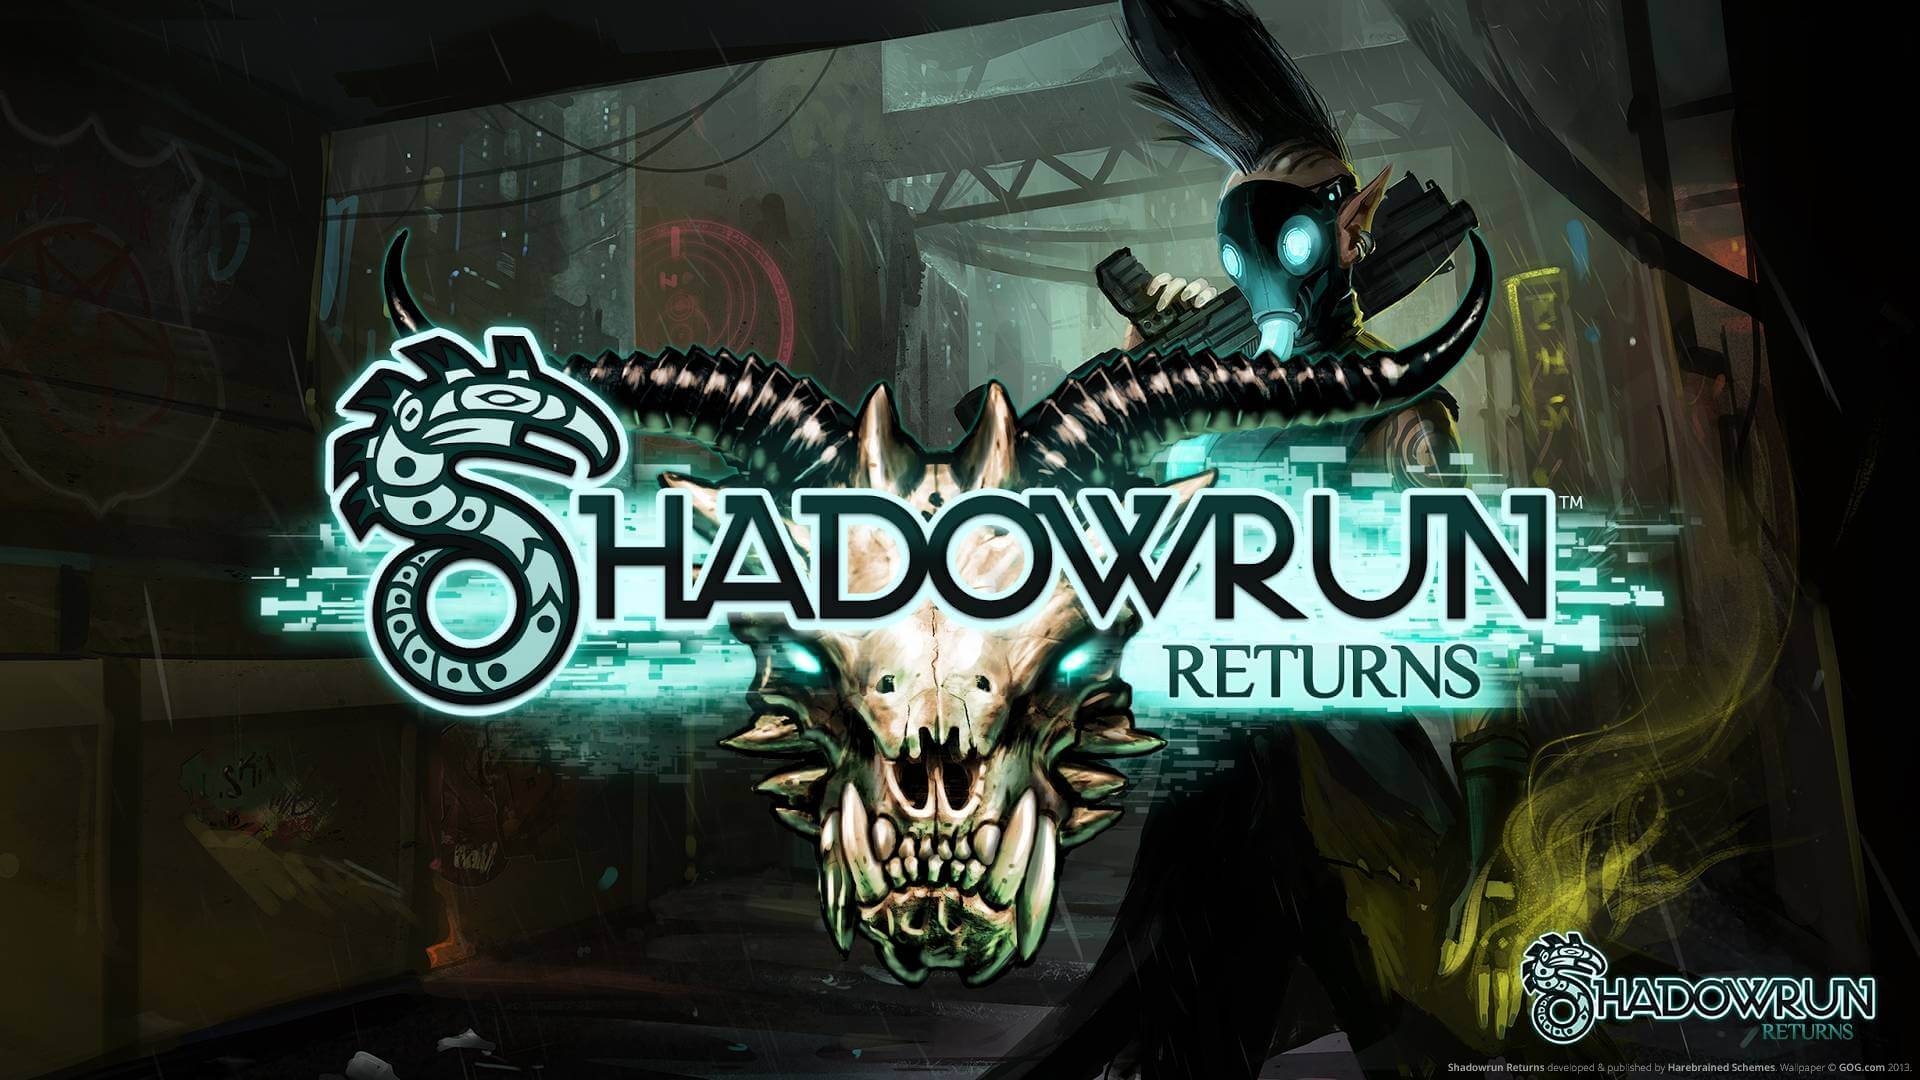 Pc ゲーム Shadowrun Returns The Dead Man S Switch 日本語化メモ Awgs Foundry